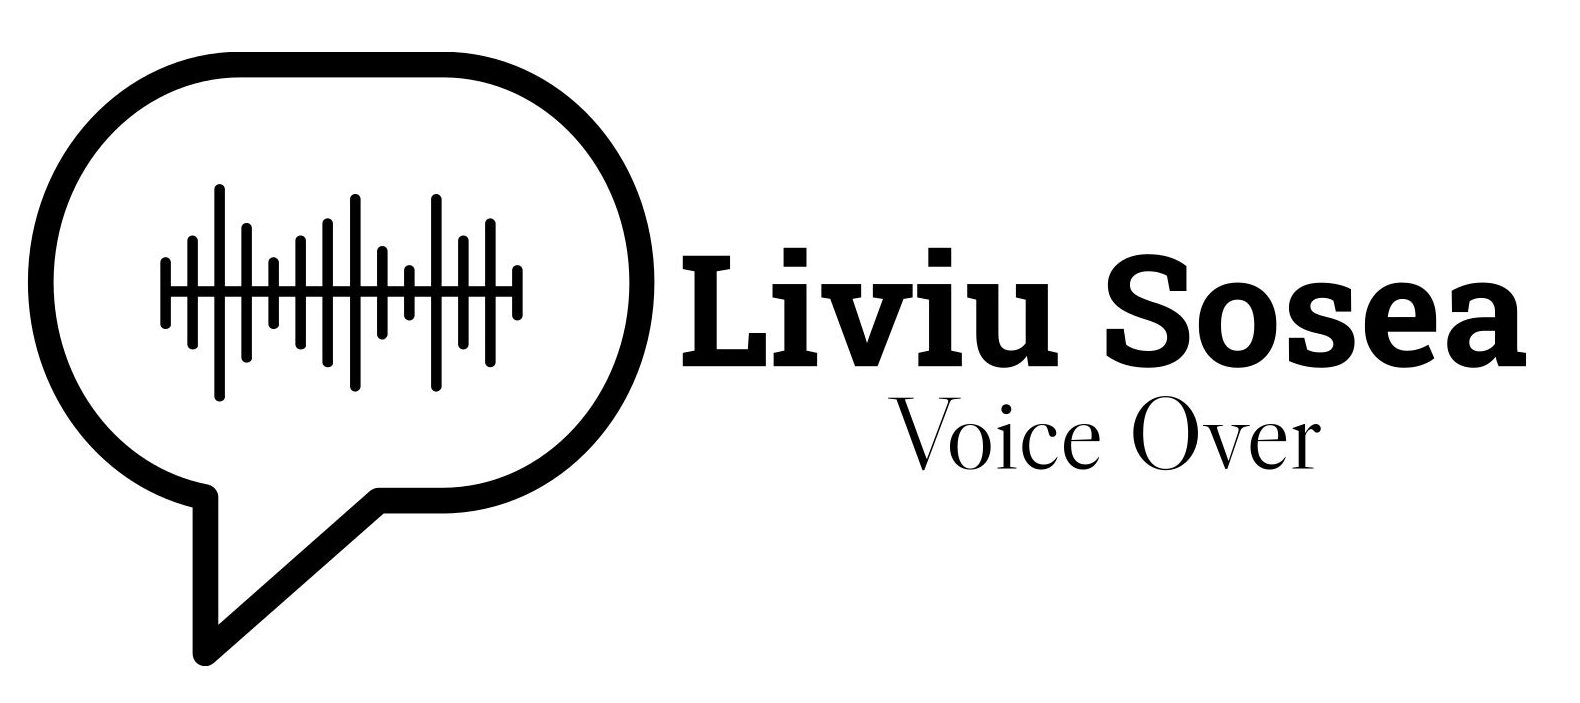 Voice Over Liviu Sosea